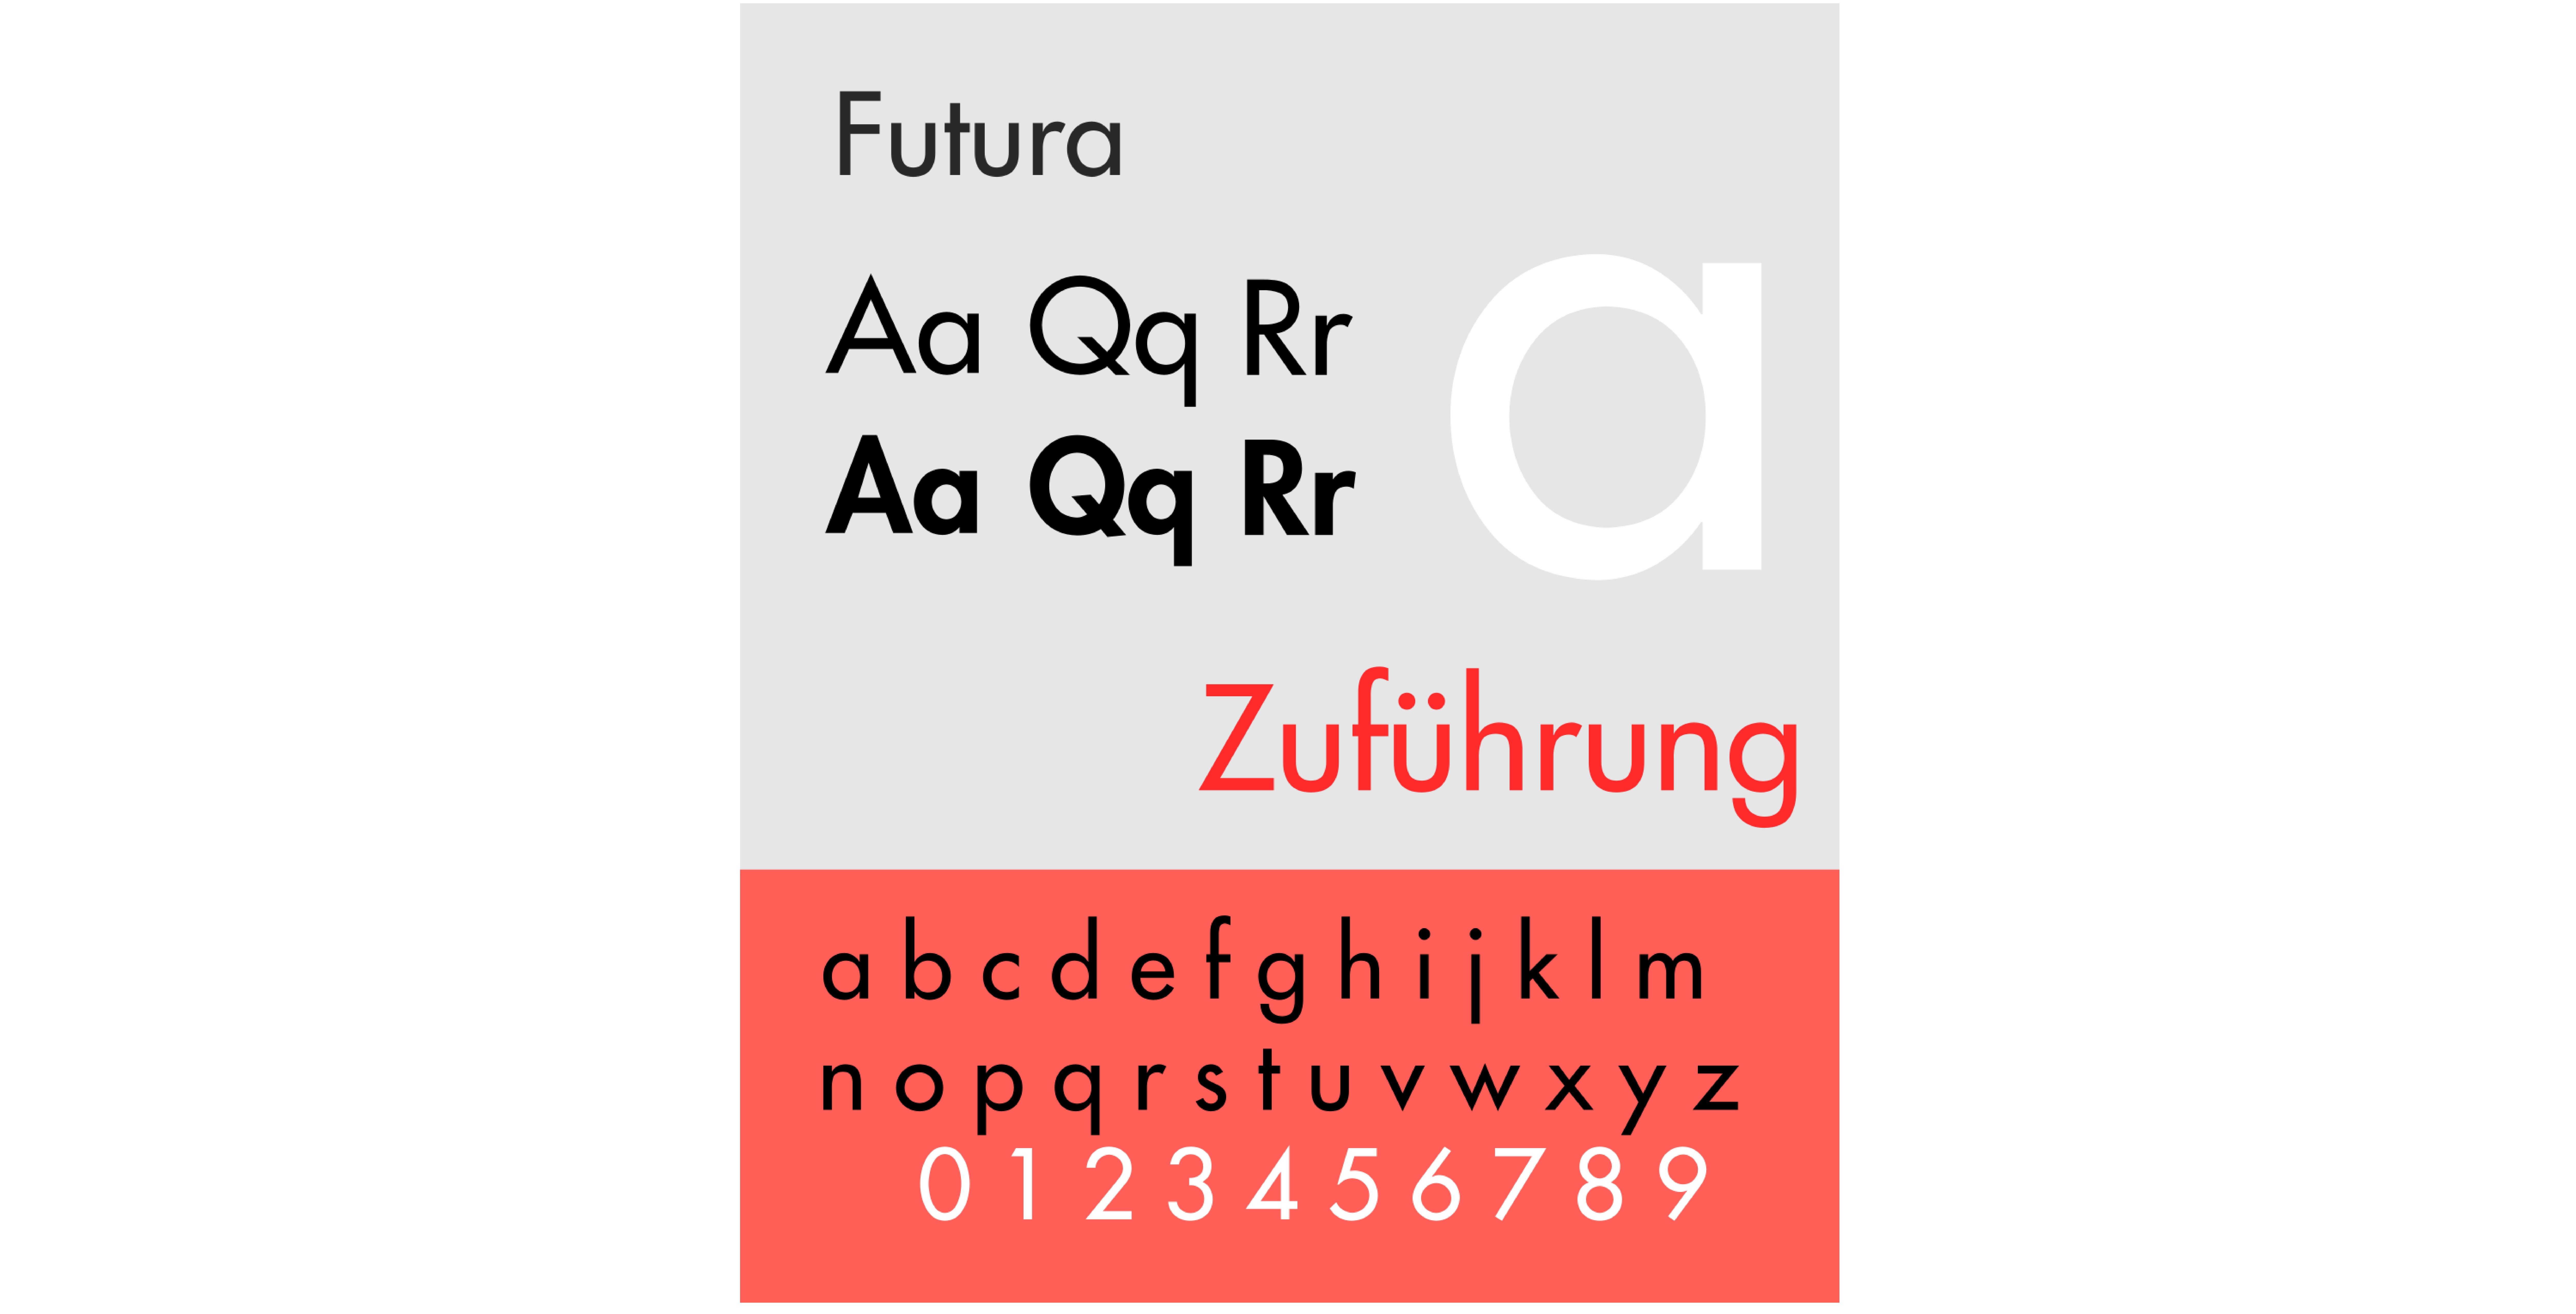 The Futura Typeface. 